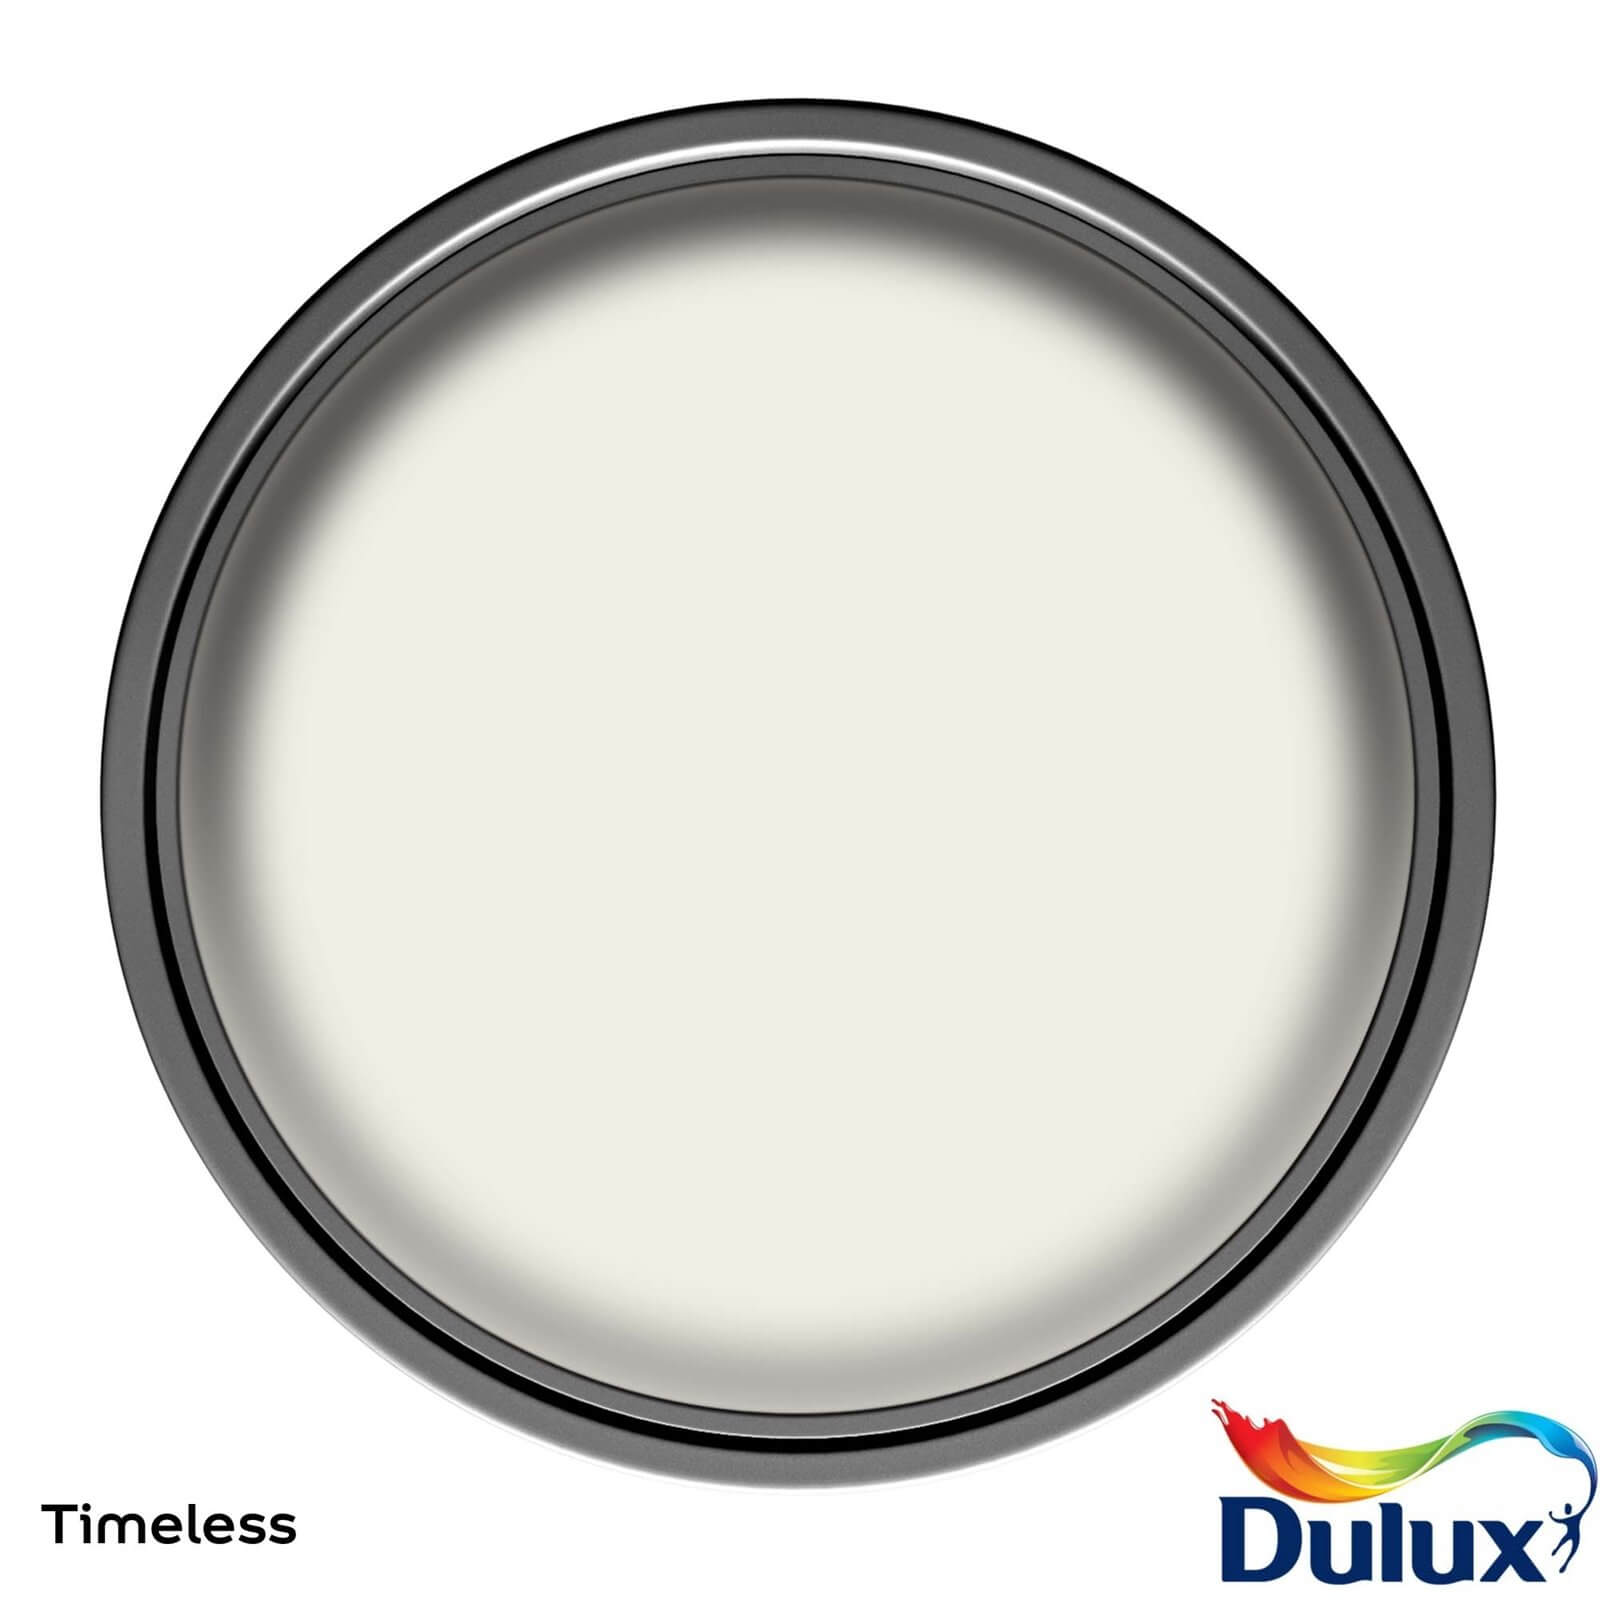 Dulux Matt Emulsion Paint Timeless - 2.5L